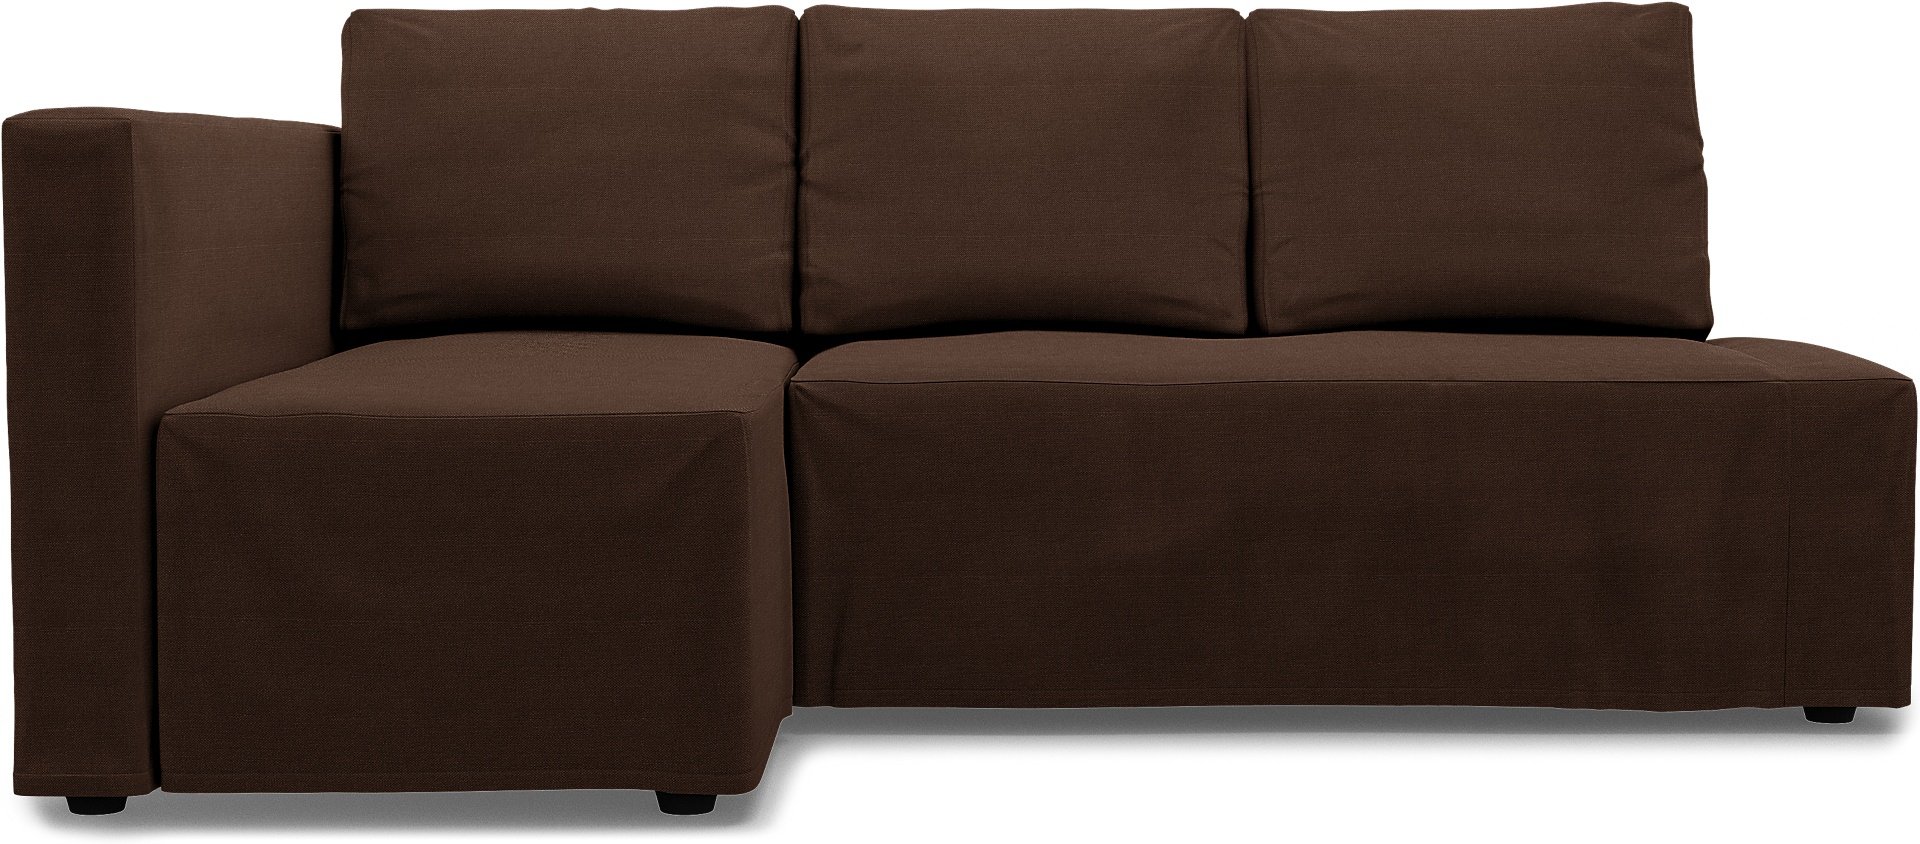 IKEA - Friheten Sofa Bed with Left Chaise Cover, Chocolate, Linen - Bemz